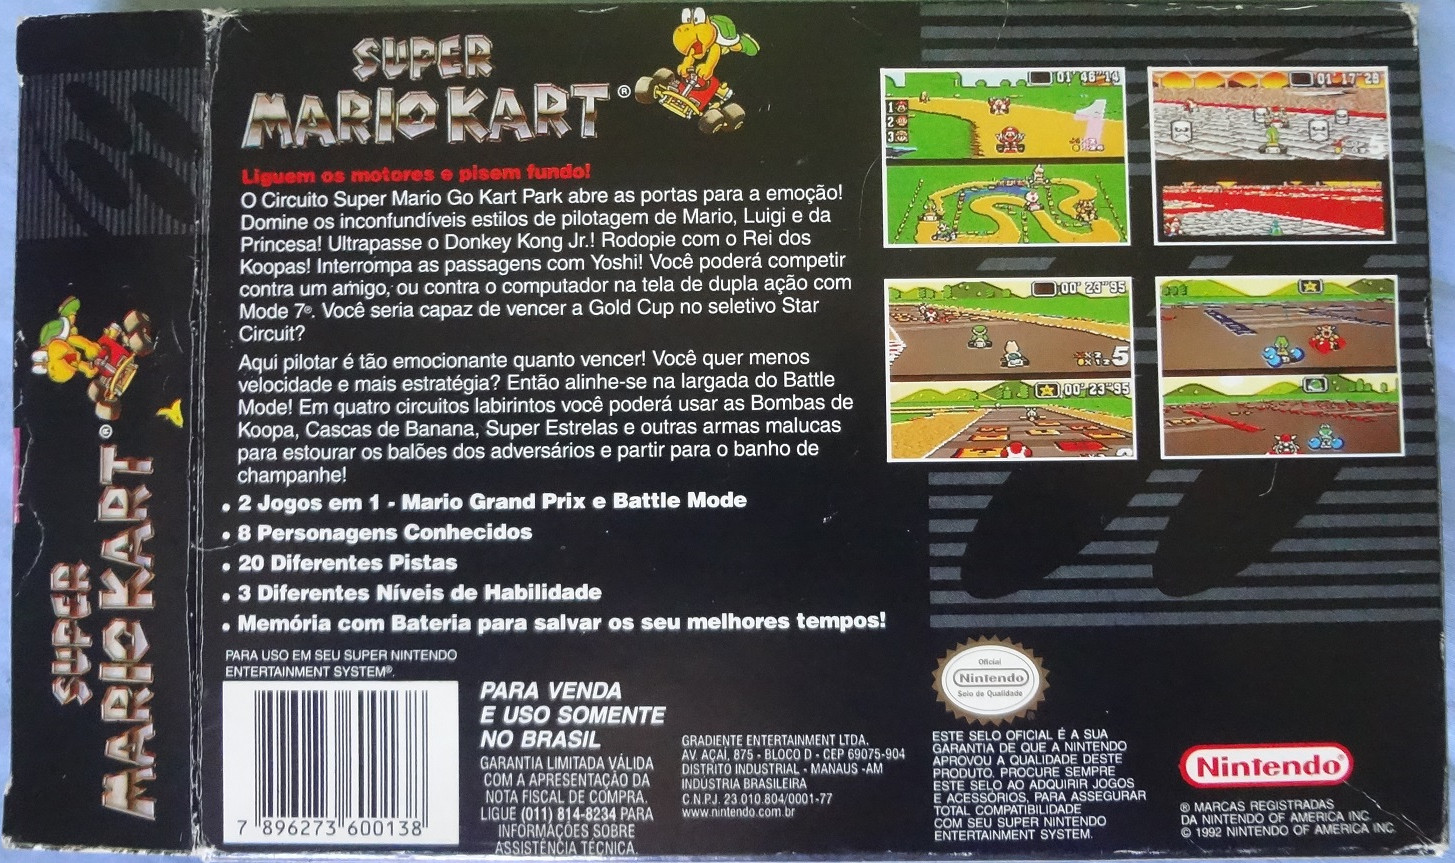 Super Mario Kart - Best Seller release - Gradiente (Box - back)